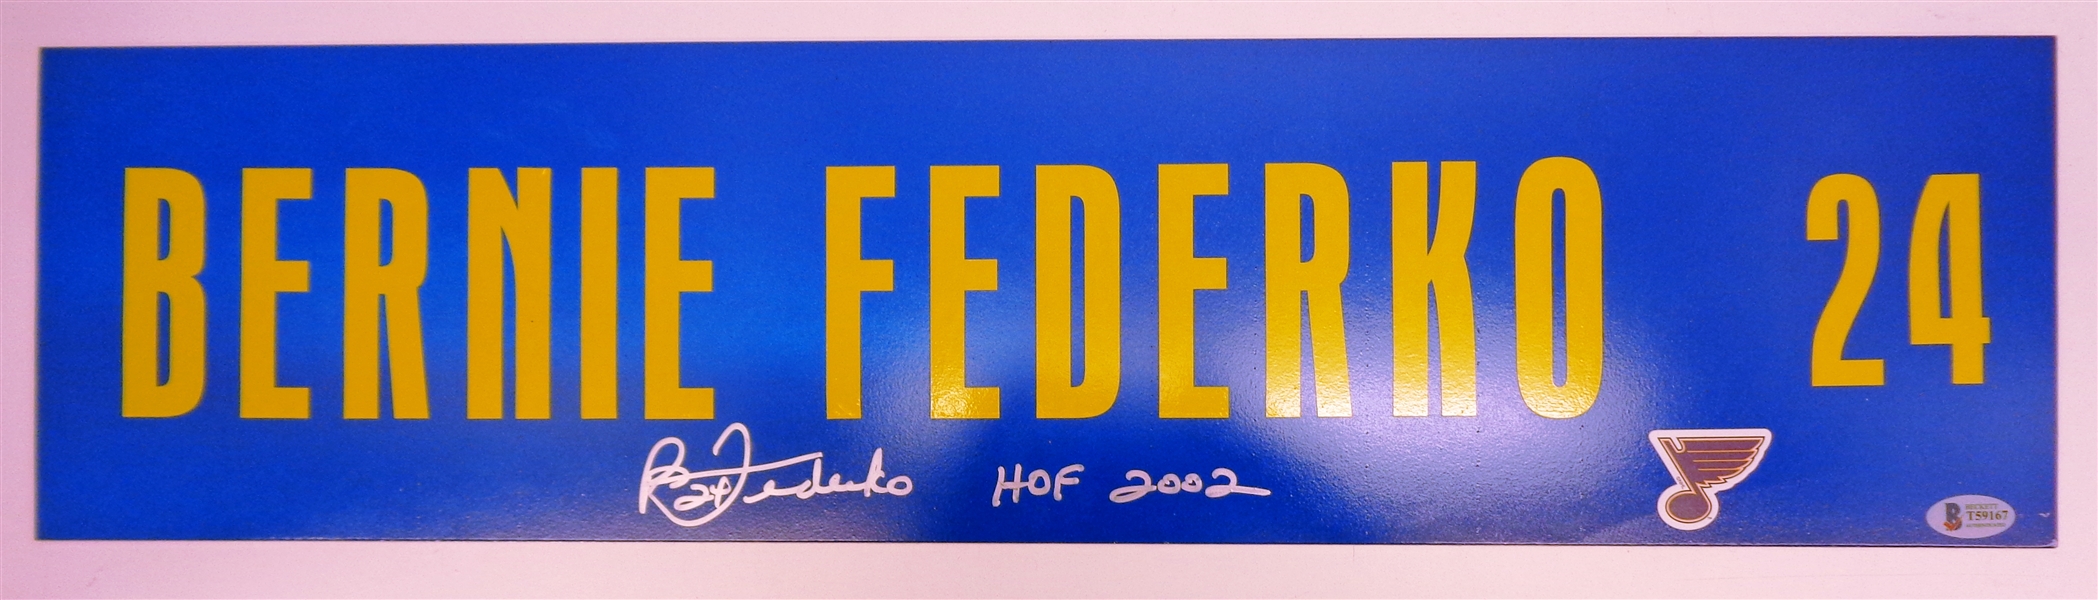 Bernie Federko Autographed 6x24 Street Sign